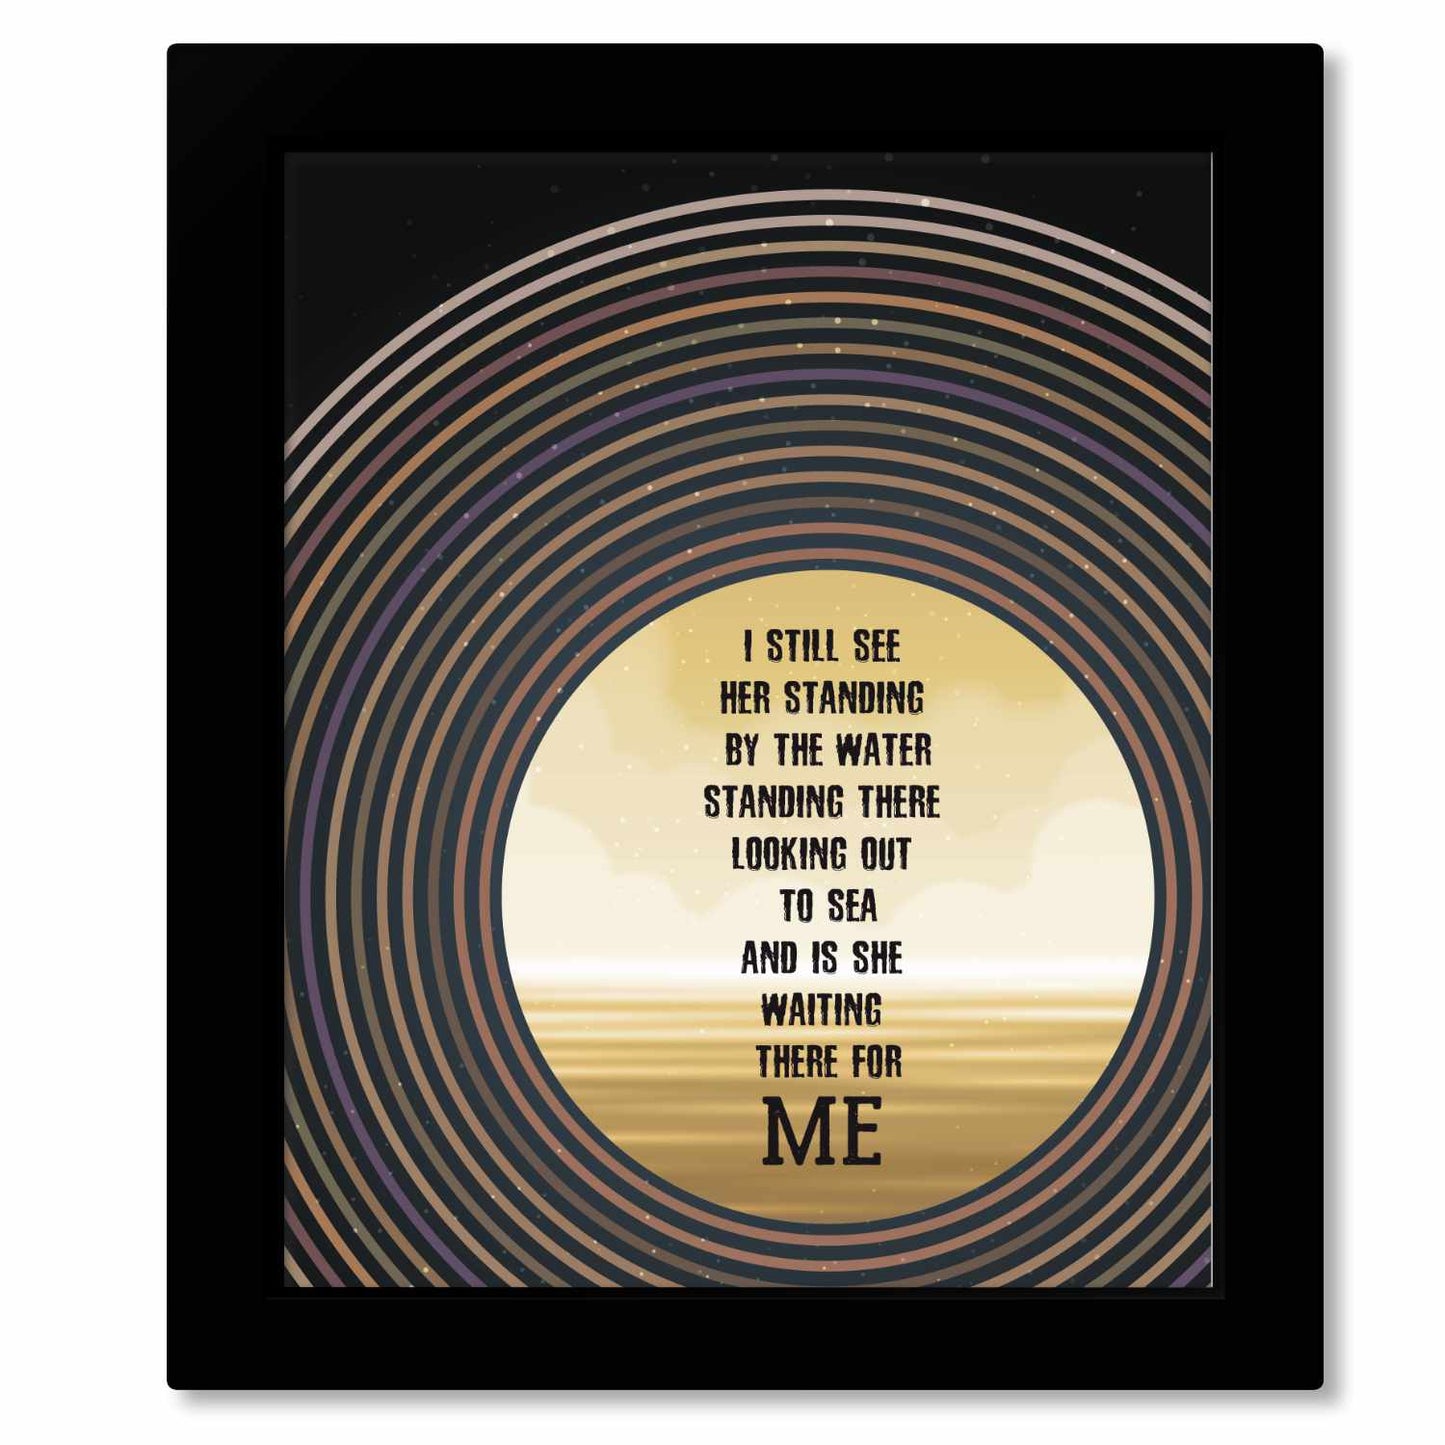 Galveston by Glen Campbell - Country Rock Music Art Print Song Lyrics Art Song Lyrics Art 8x10 Framed Print (without mat) 